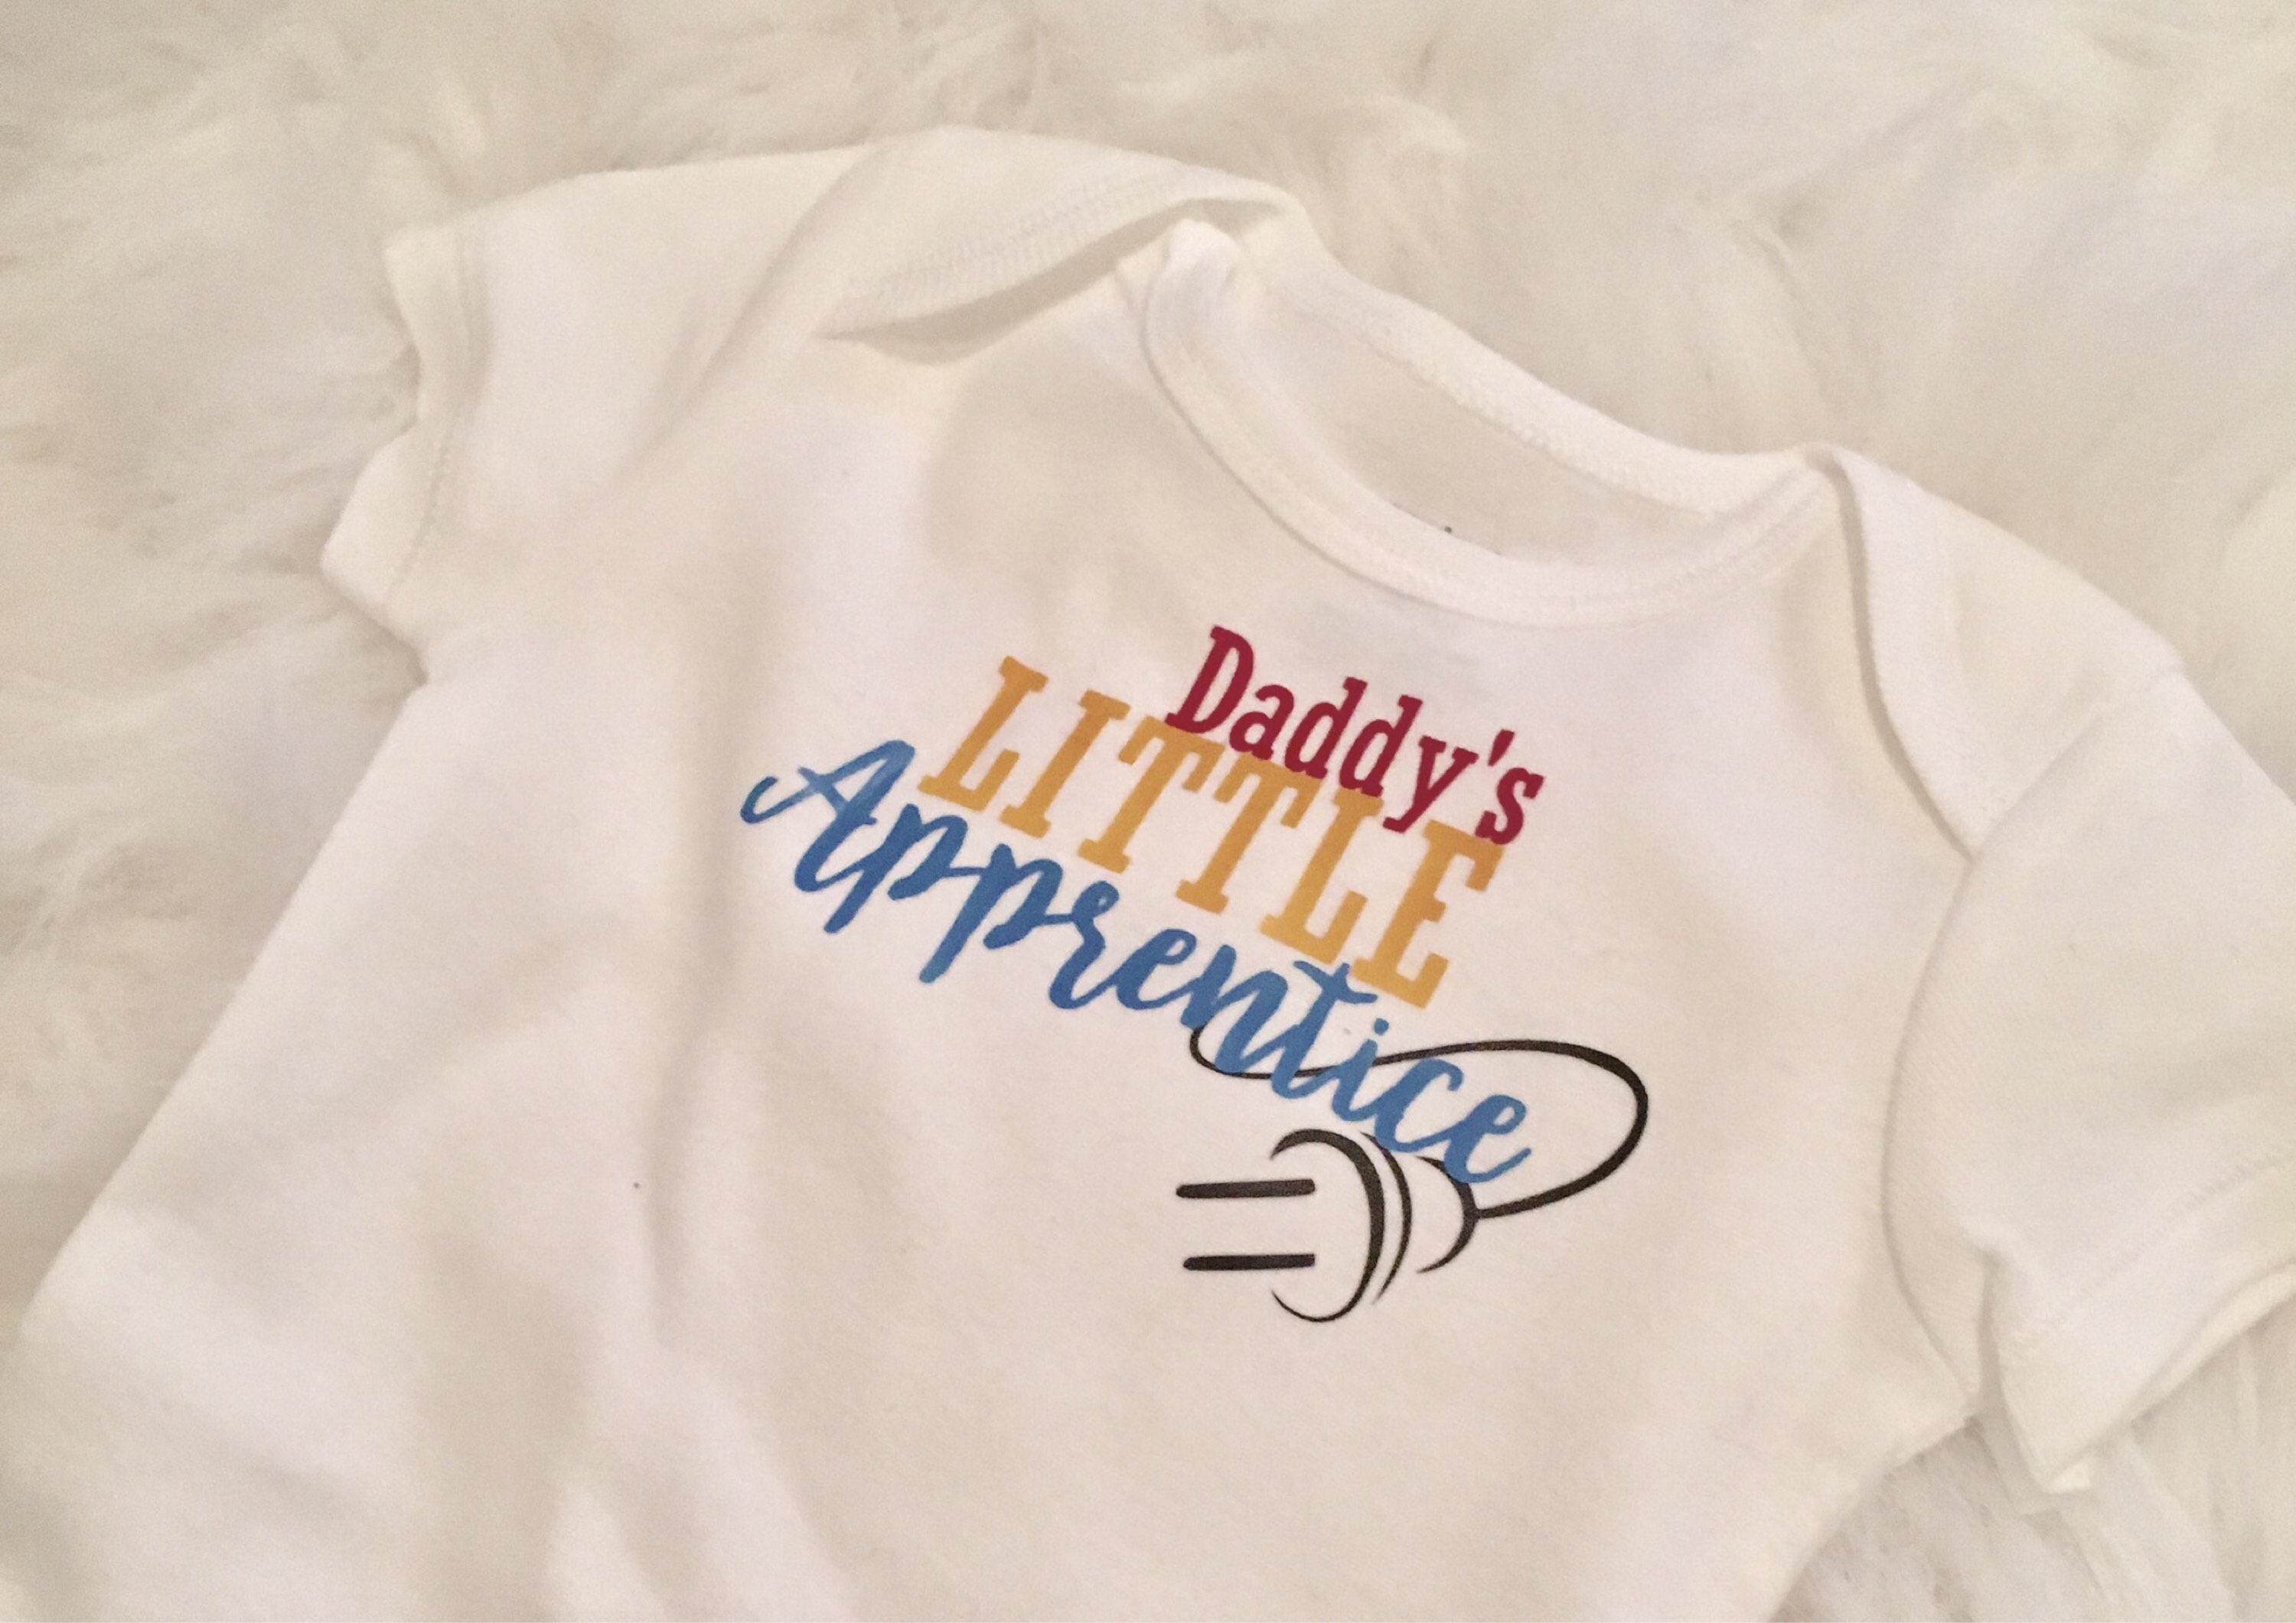 Daddys little apprentice, apprentice shirt, little boy apprentice ...